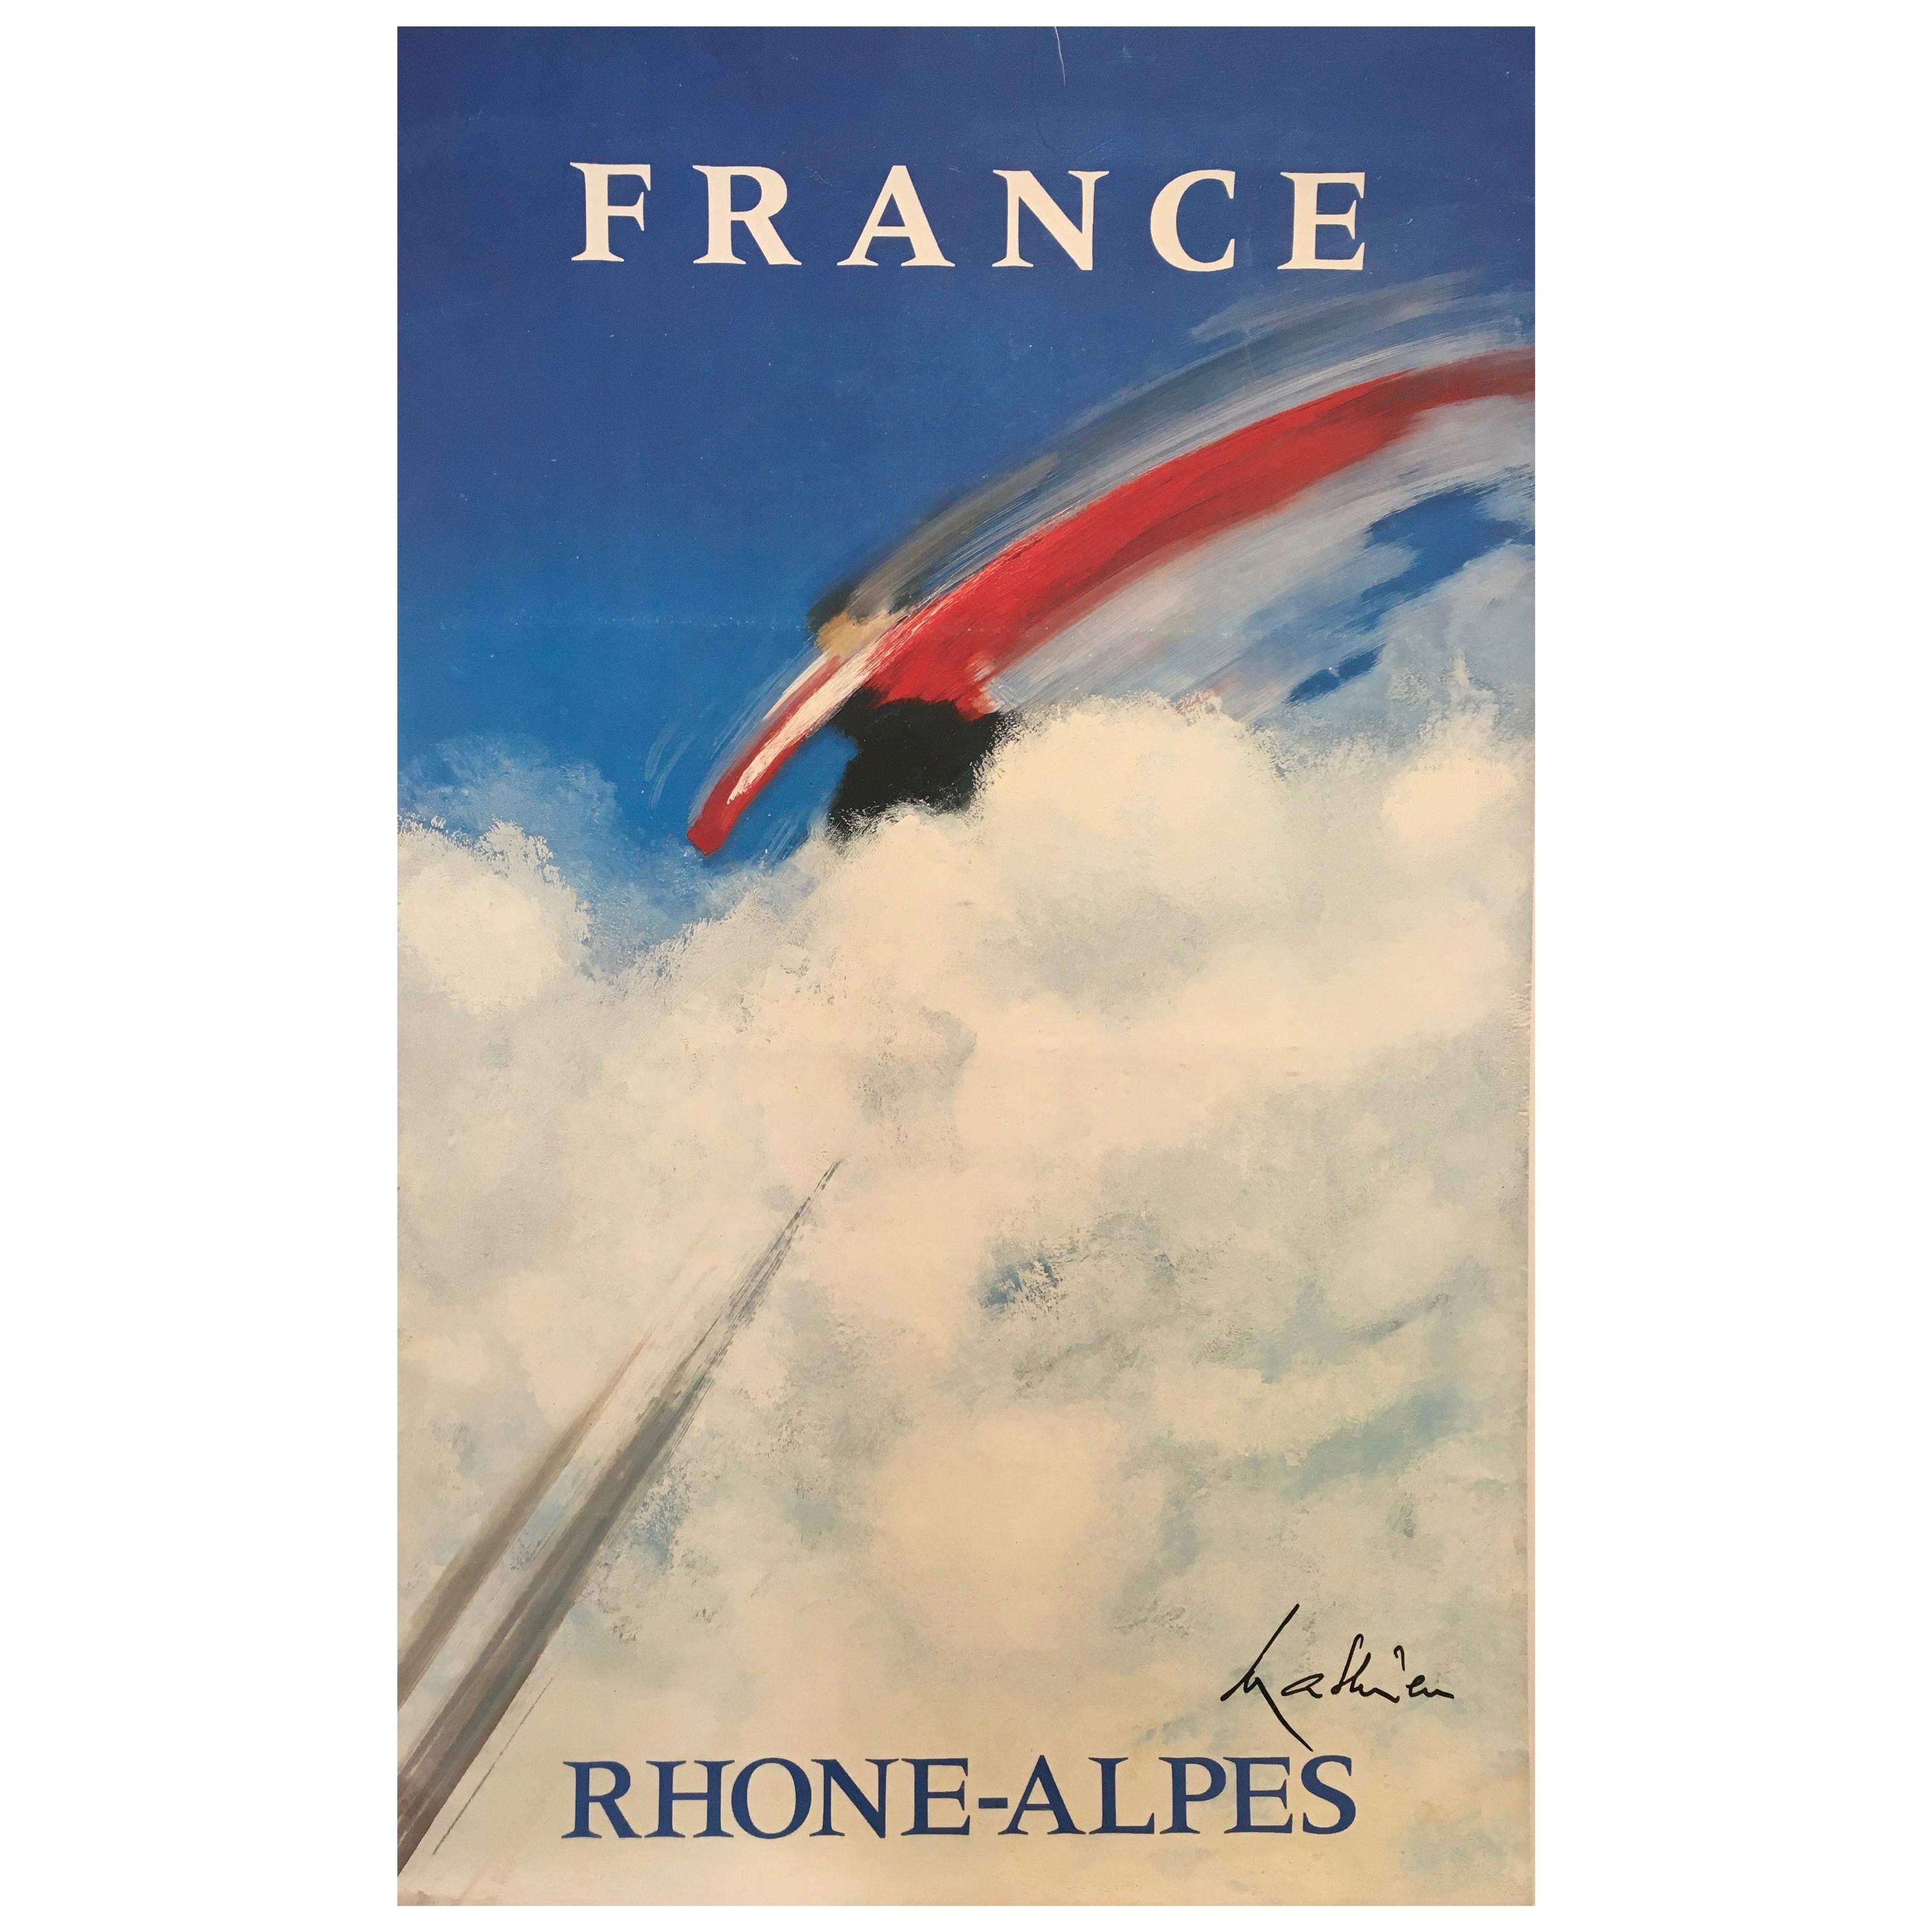 'France Rhone-Alpes' Original Vintage French Ski Poster, by Mathieu